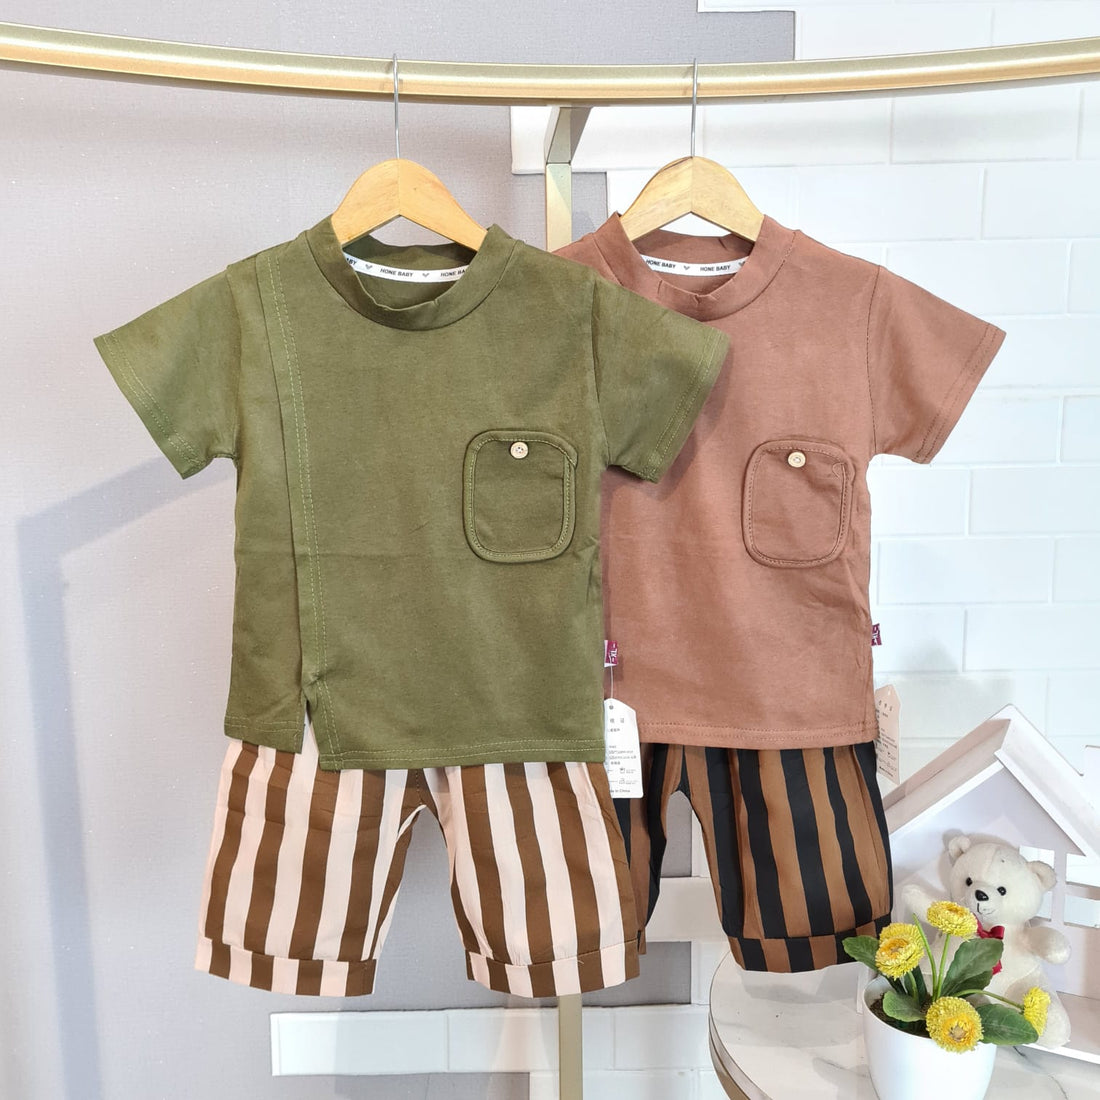 [345469-V1] - Baju Setelan Kaos Polos Celana Belang Fashion Import Anak Laki-Laki - Motif Plain Striped